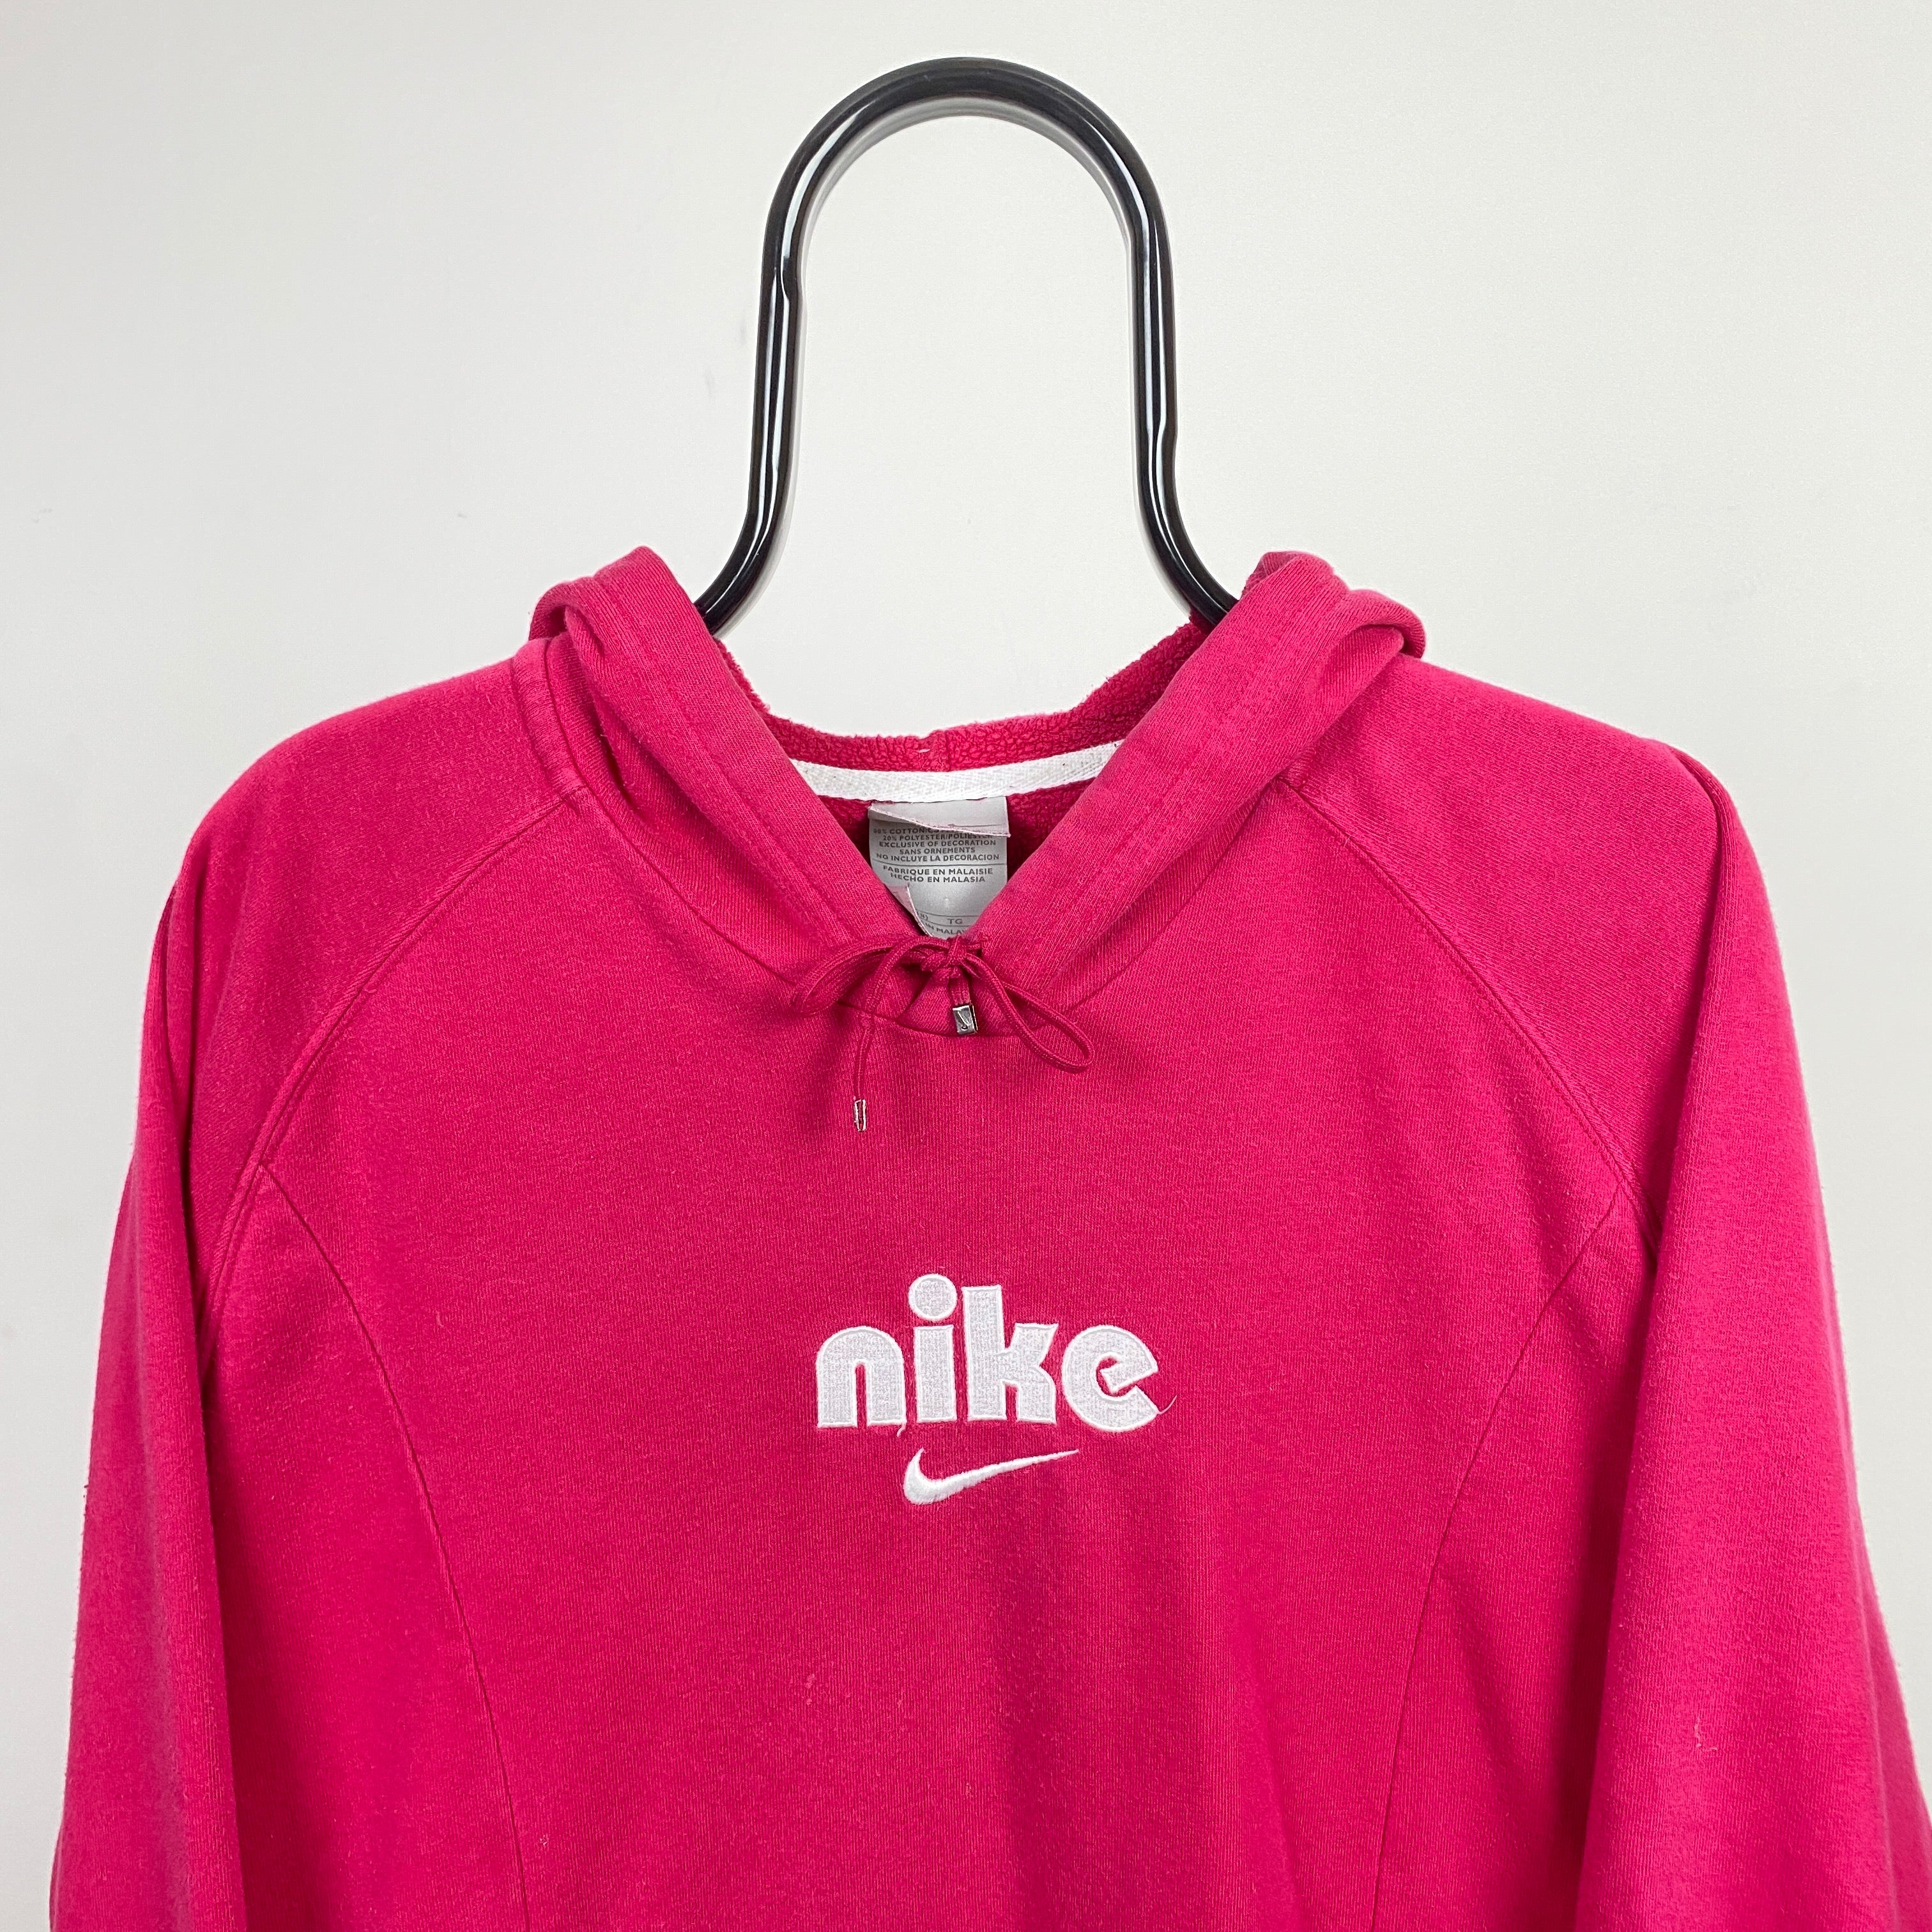 00s Nike Hoodie Pink Large/XL